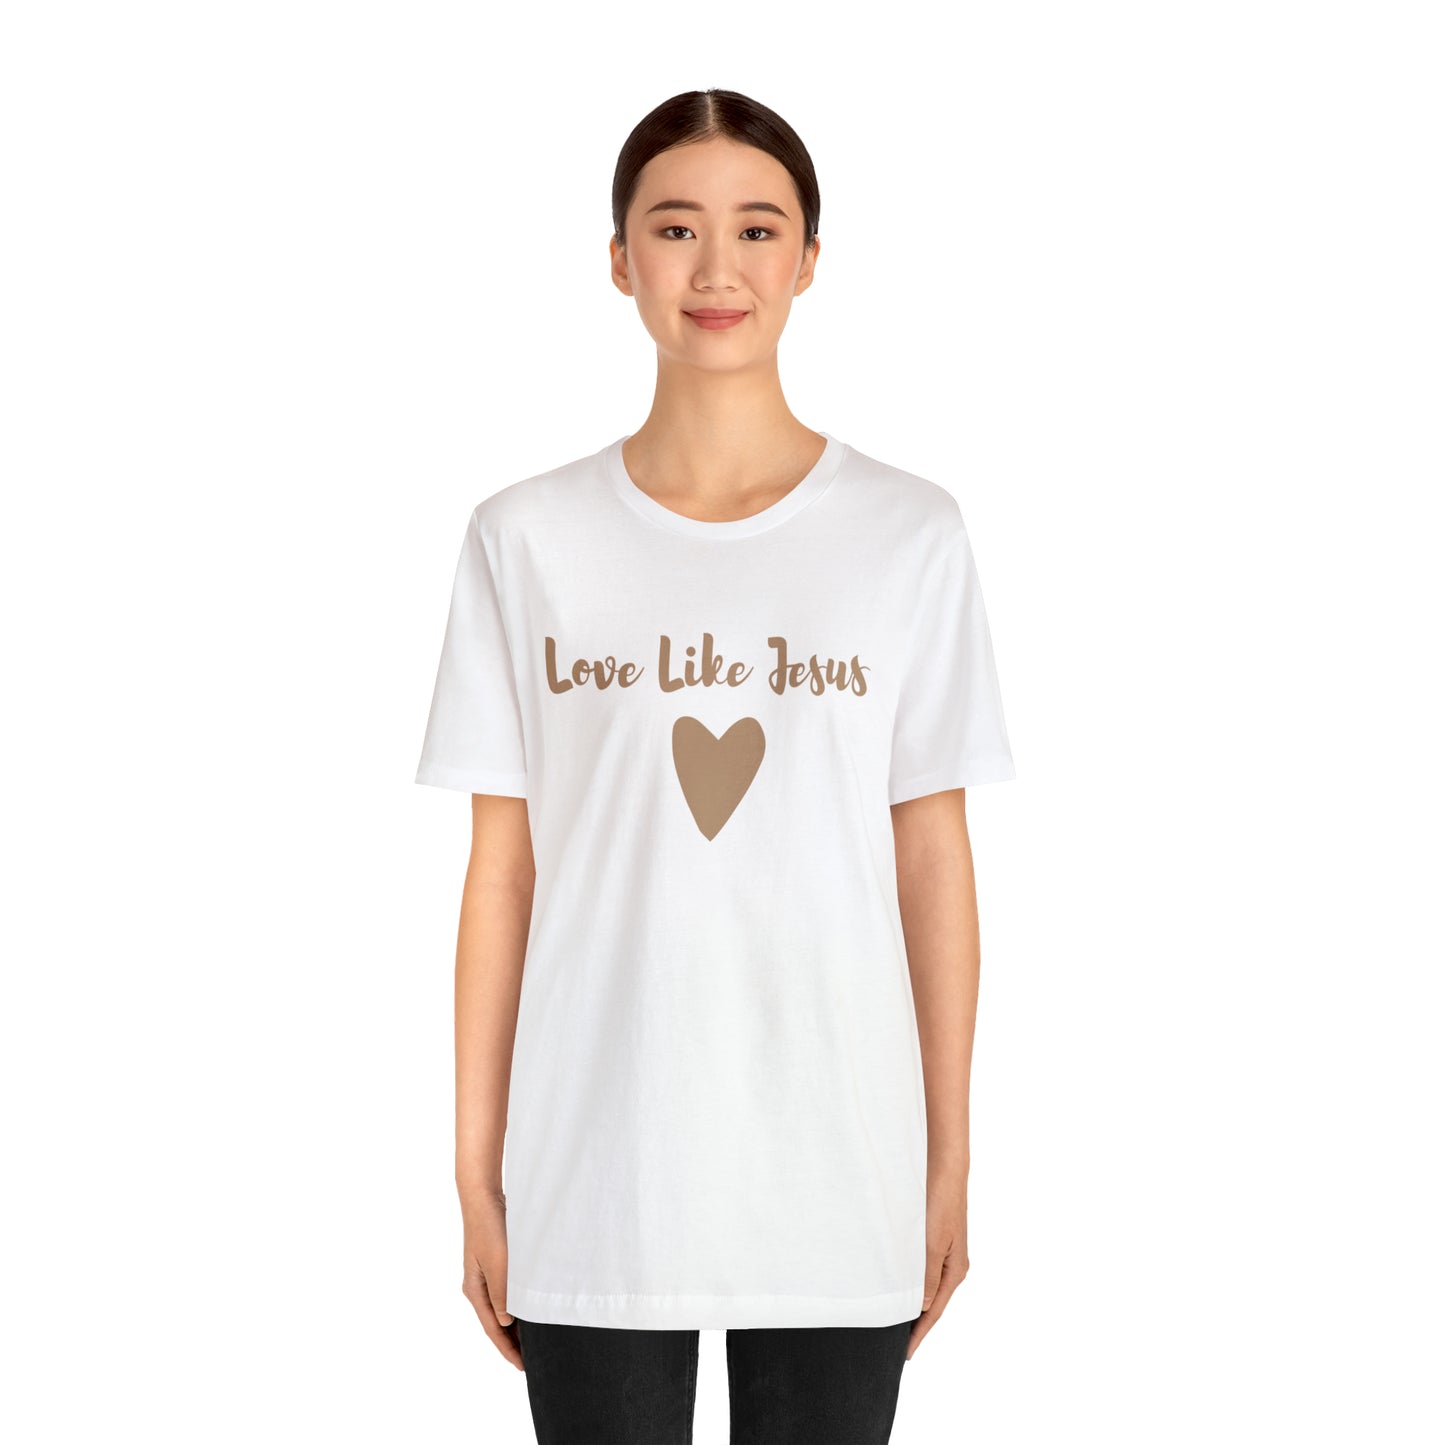 Love Like Jesus Tee Shirt - Friends of the Faith